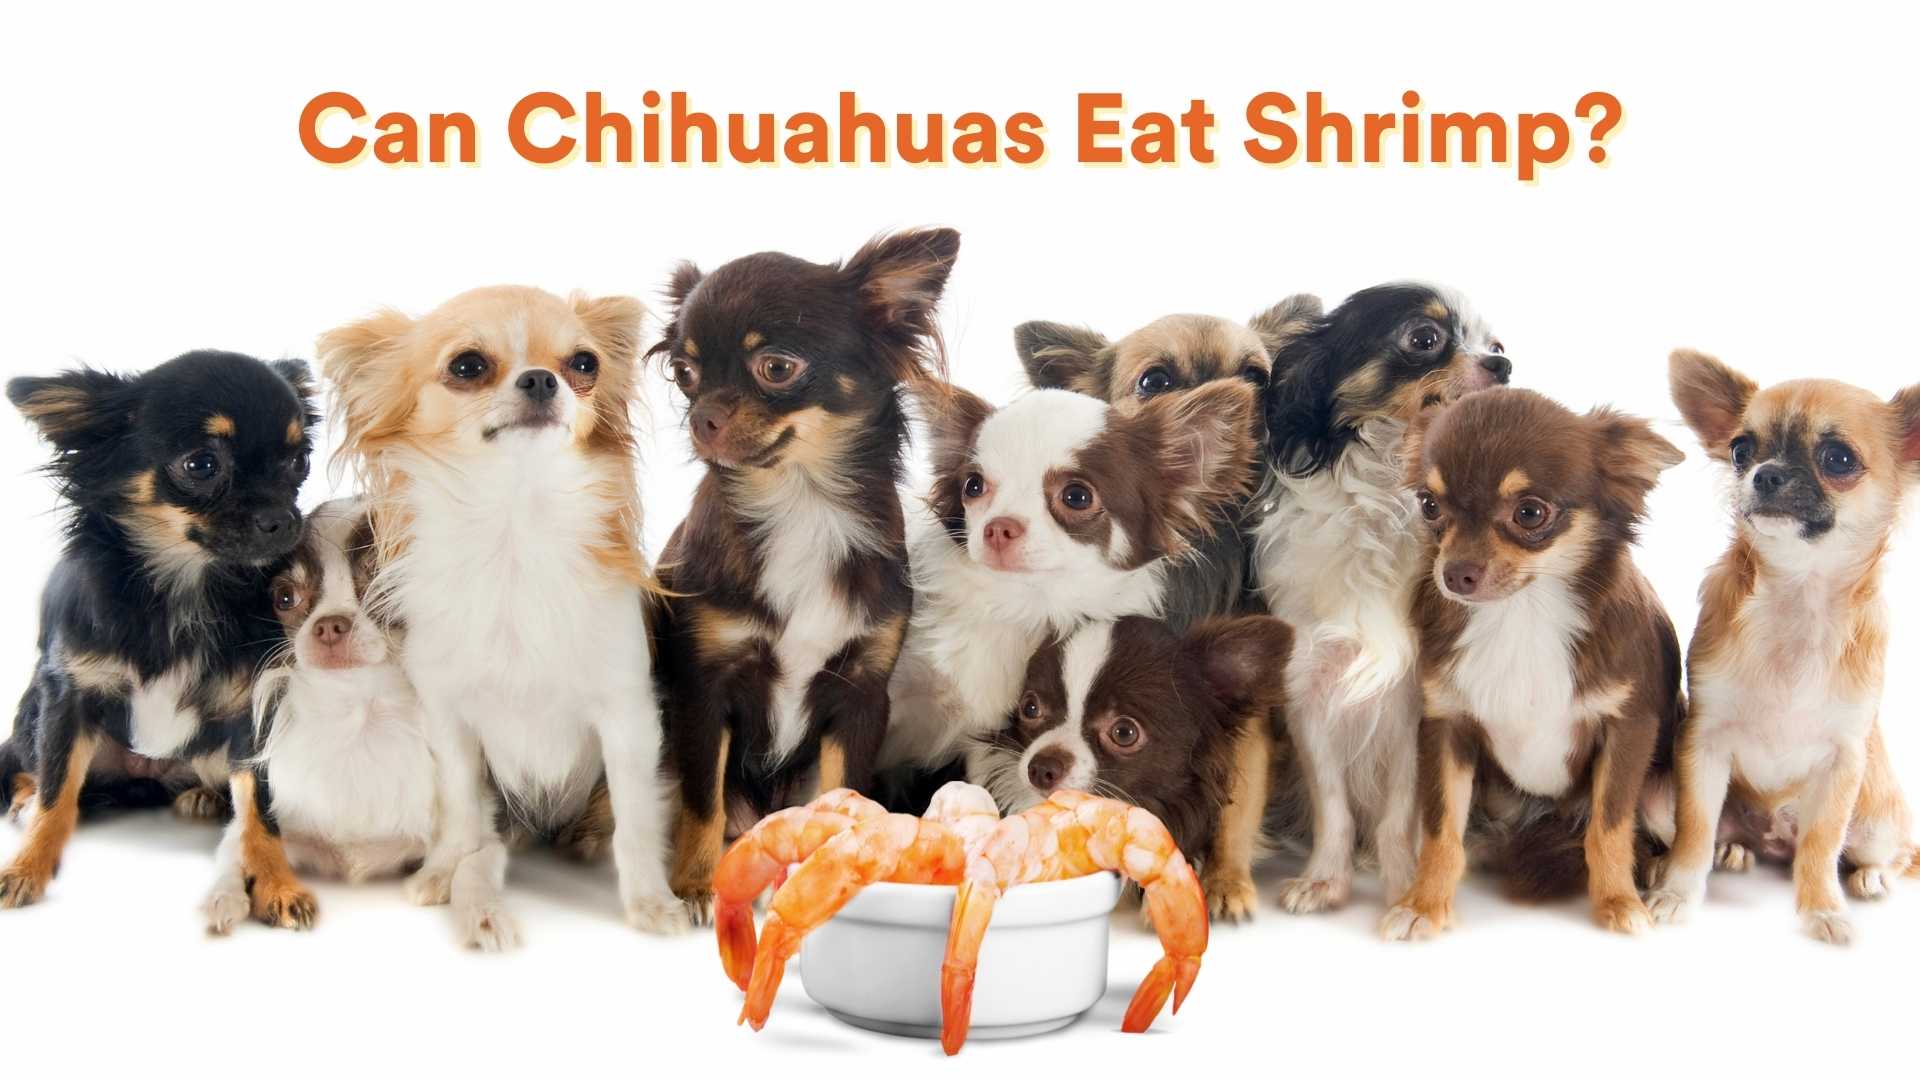 Can Chihuahuas Eat Shrimp?